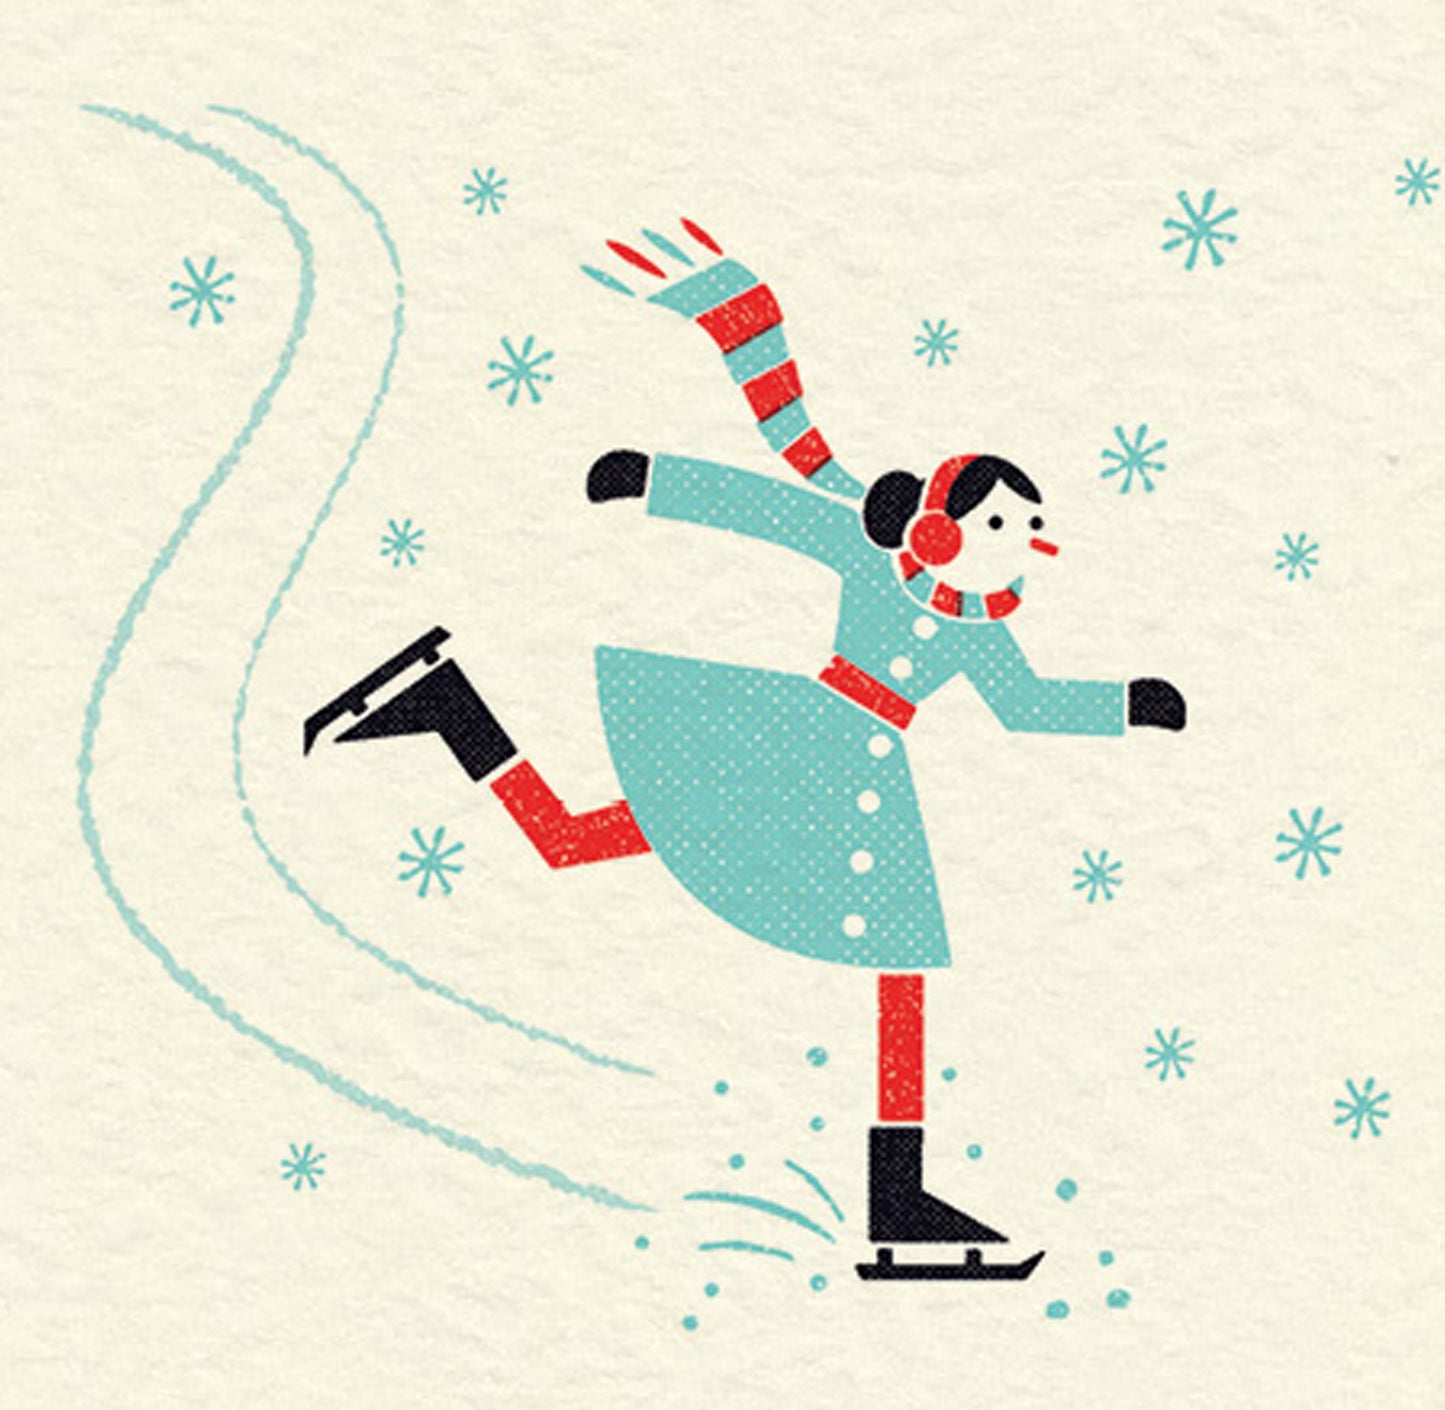 Winter Sports Christmas: Skate